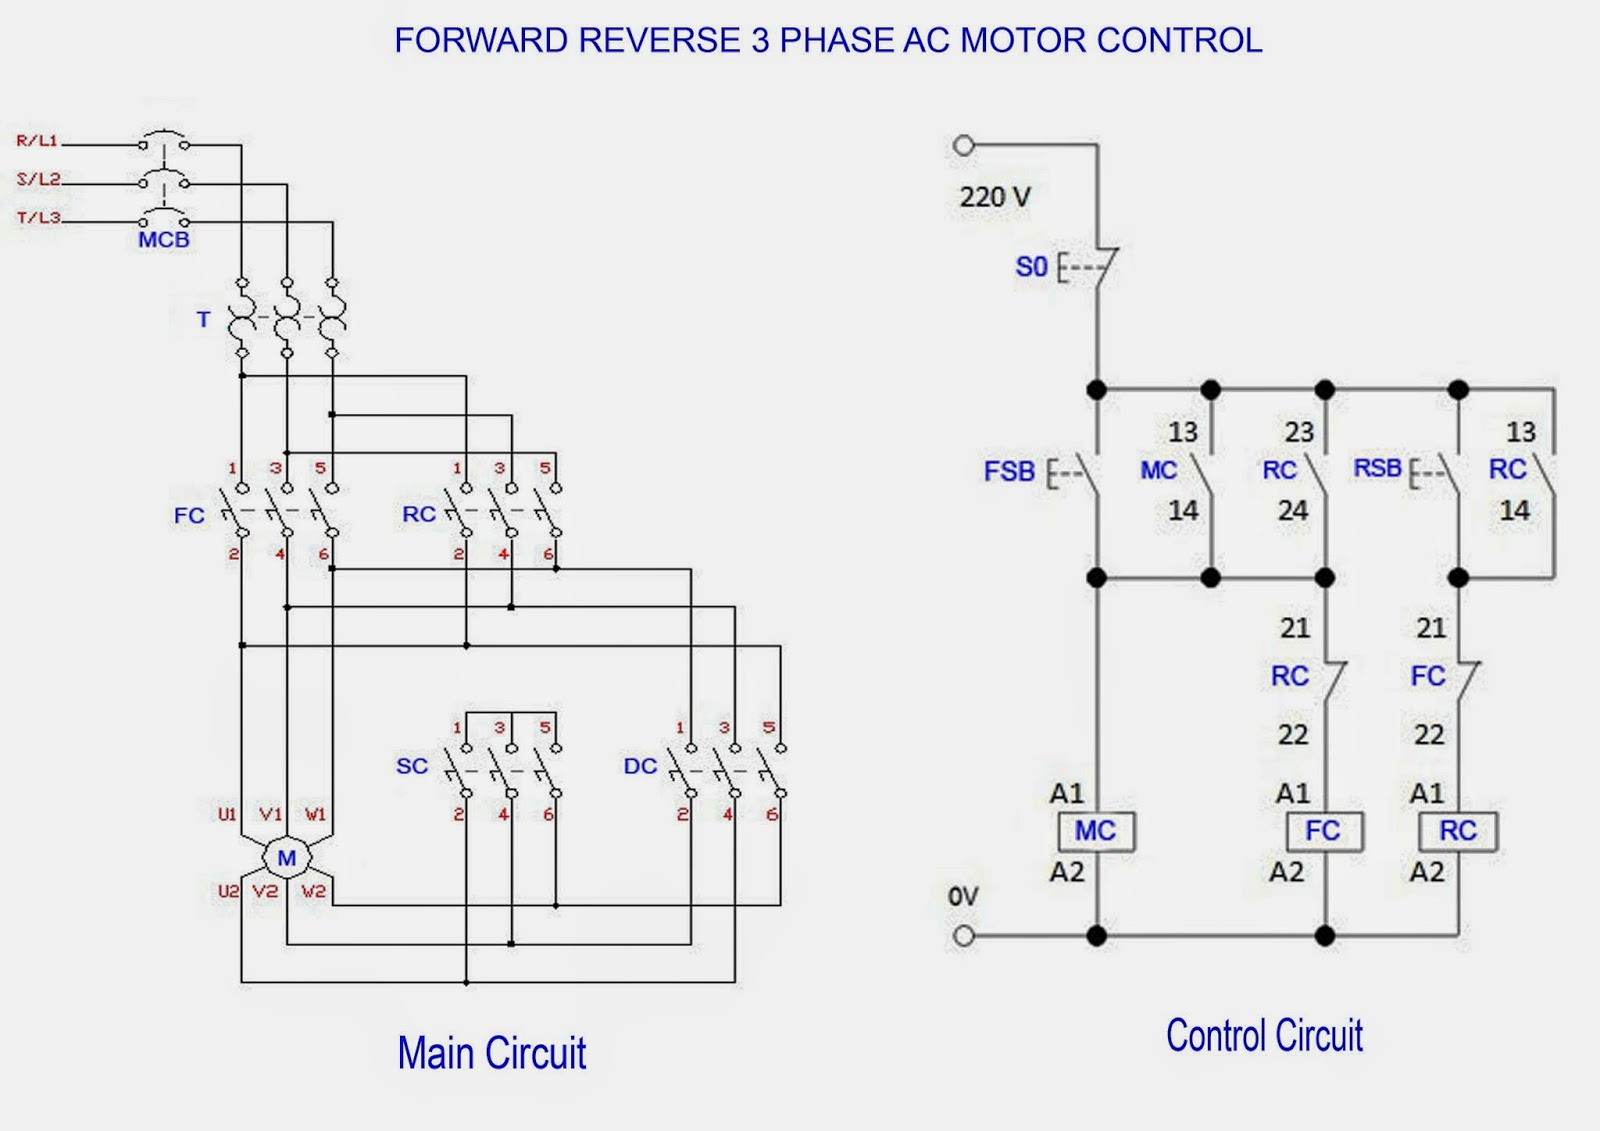 Wiring Diagram Forward - Wiring Diagram Detailed - 5 Wire Motor Wiring Diagram